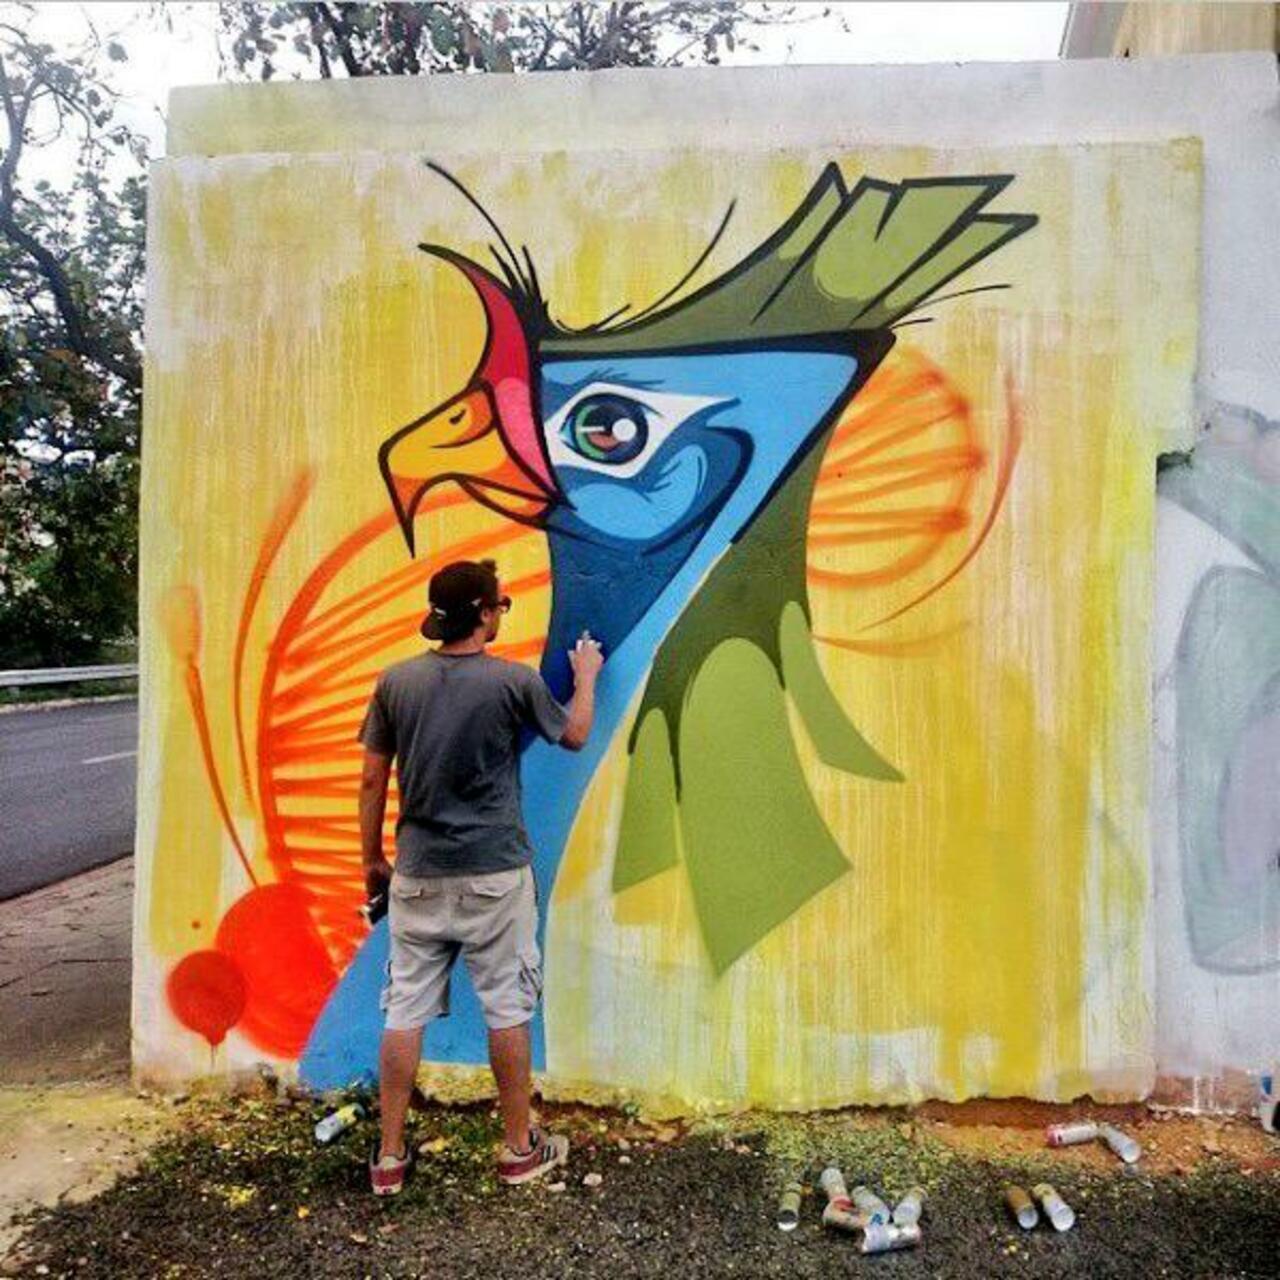 Fernando Garroux
Sao Paulo, Brazil
#streetart #art #graffiti #mural http://t.co/FXfTJLgFY6